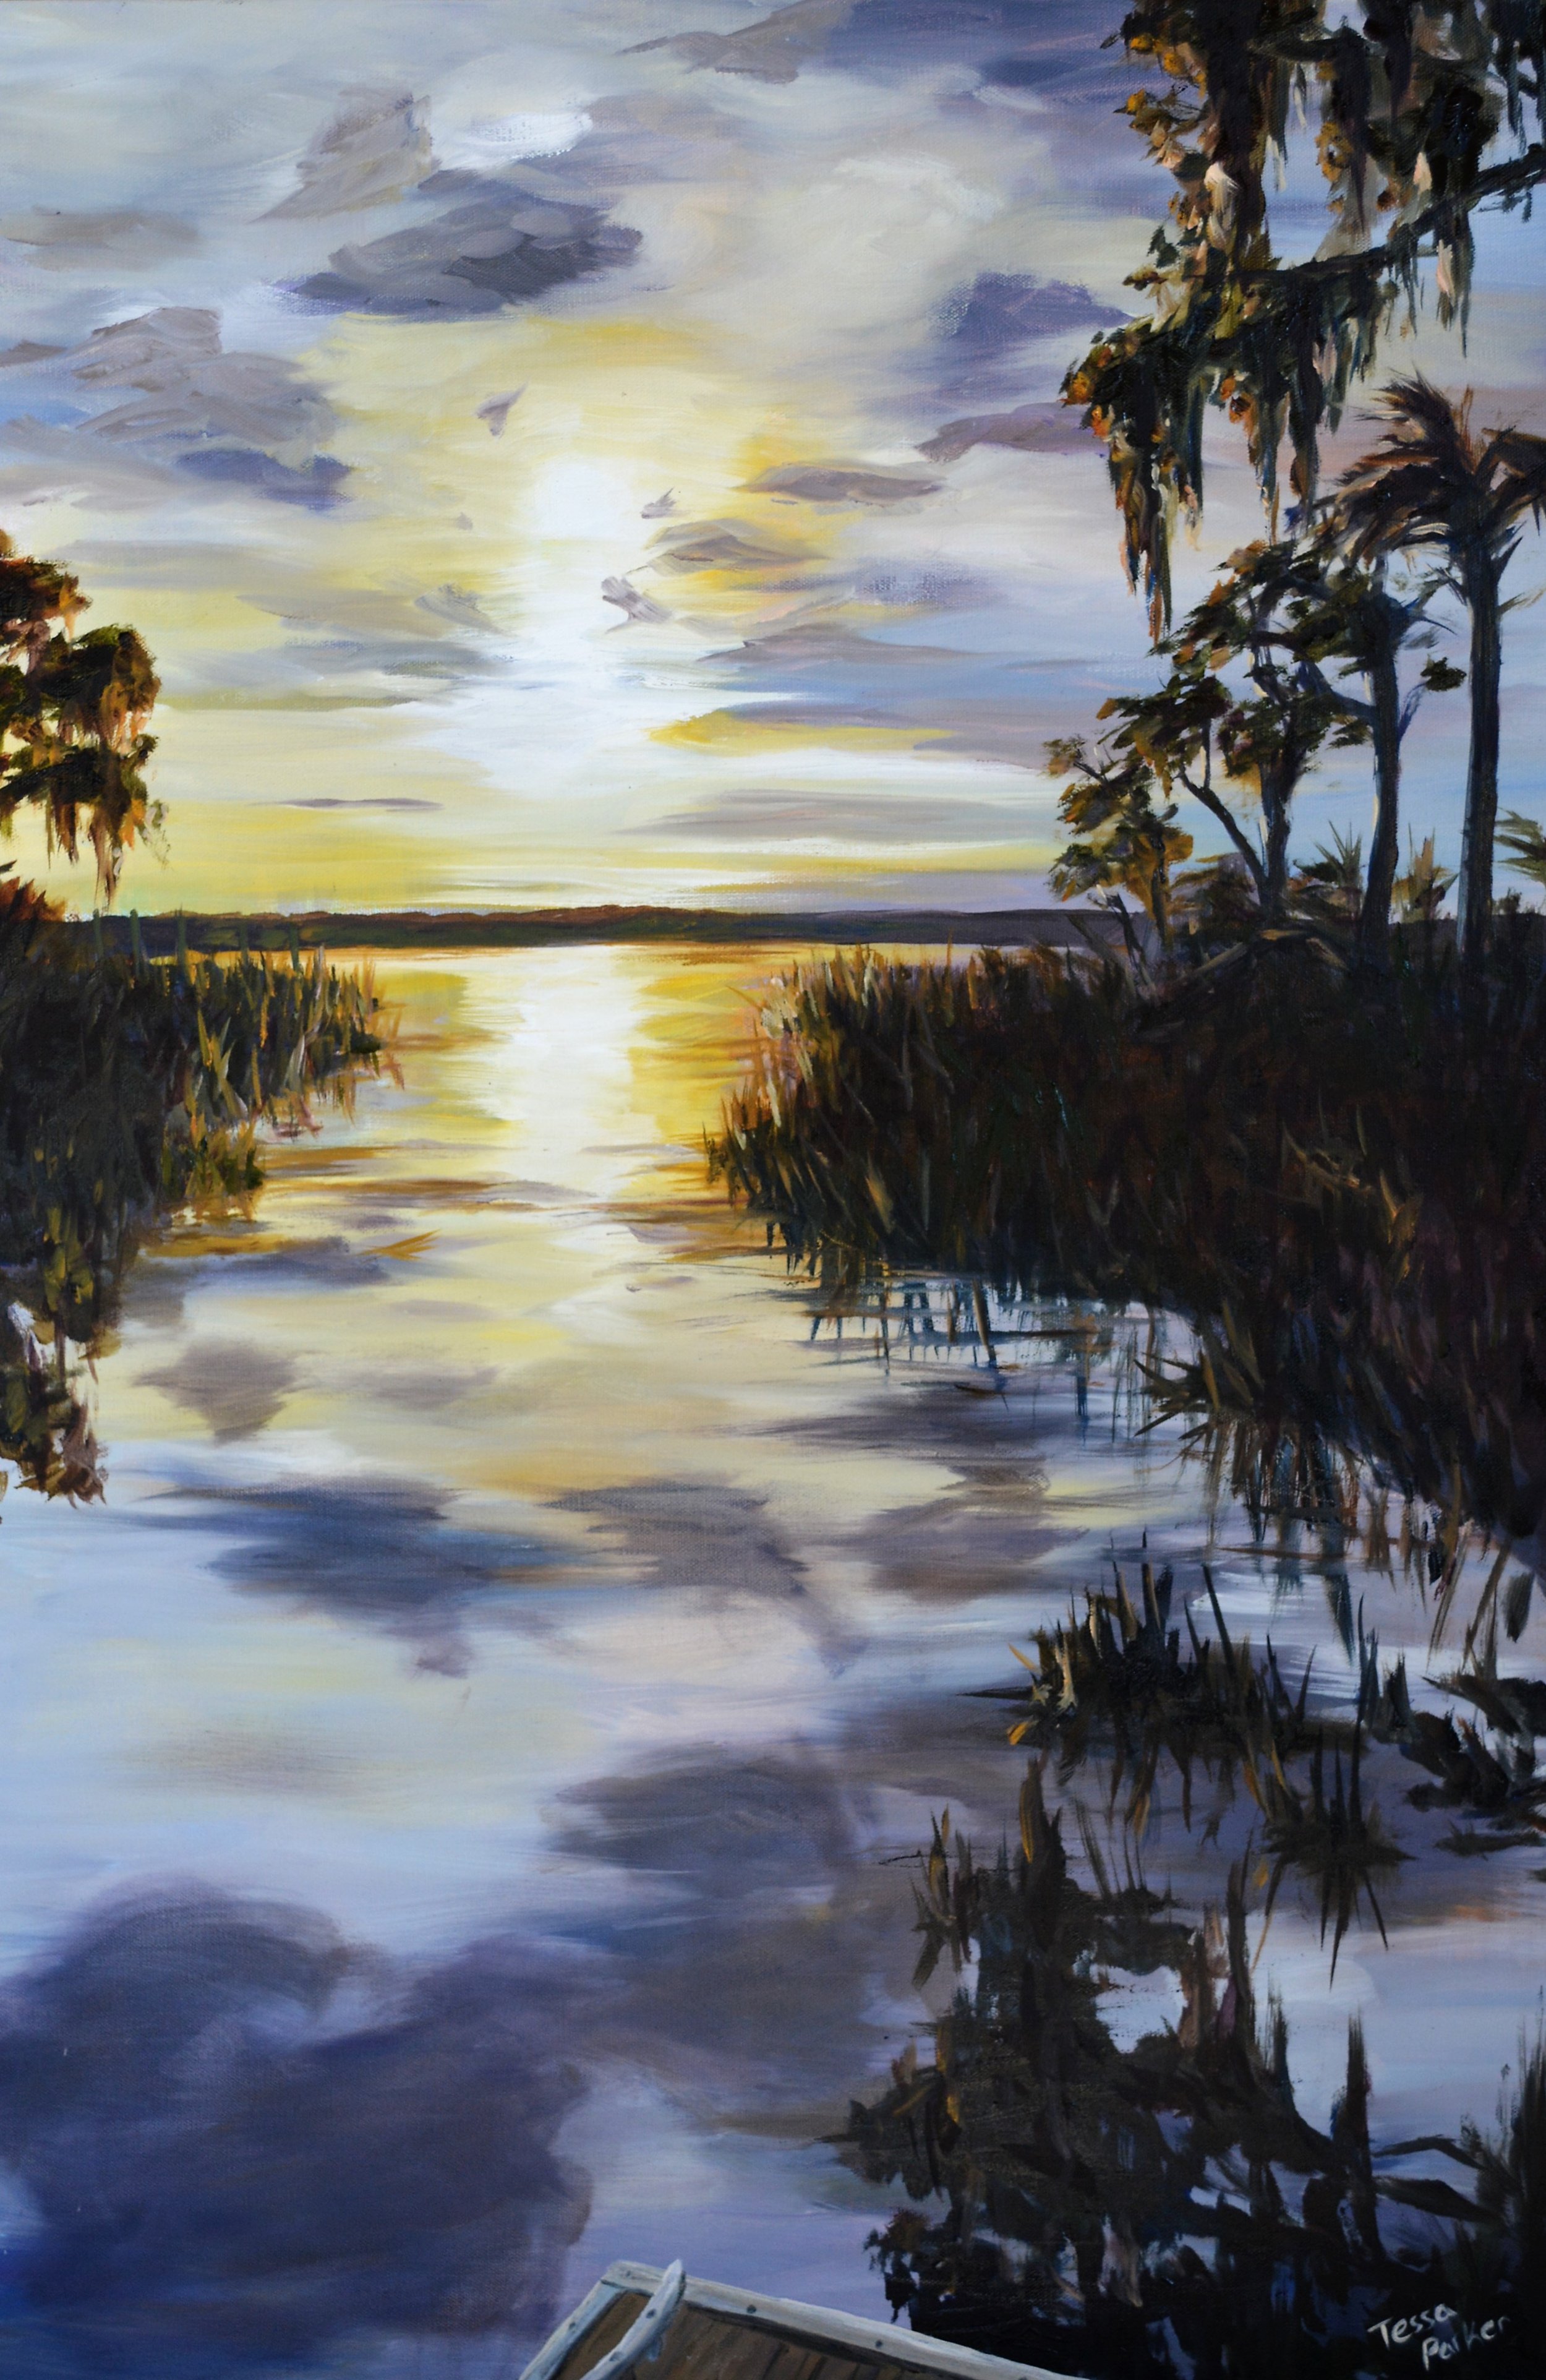 "Wilmington Park Dock at Sunset" Tessa Parker, 2022. Oil on canvas.